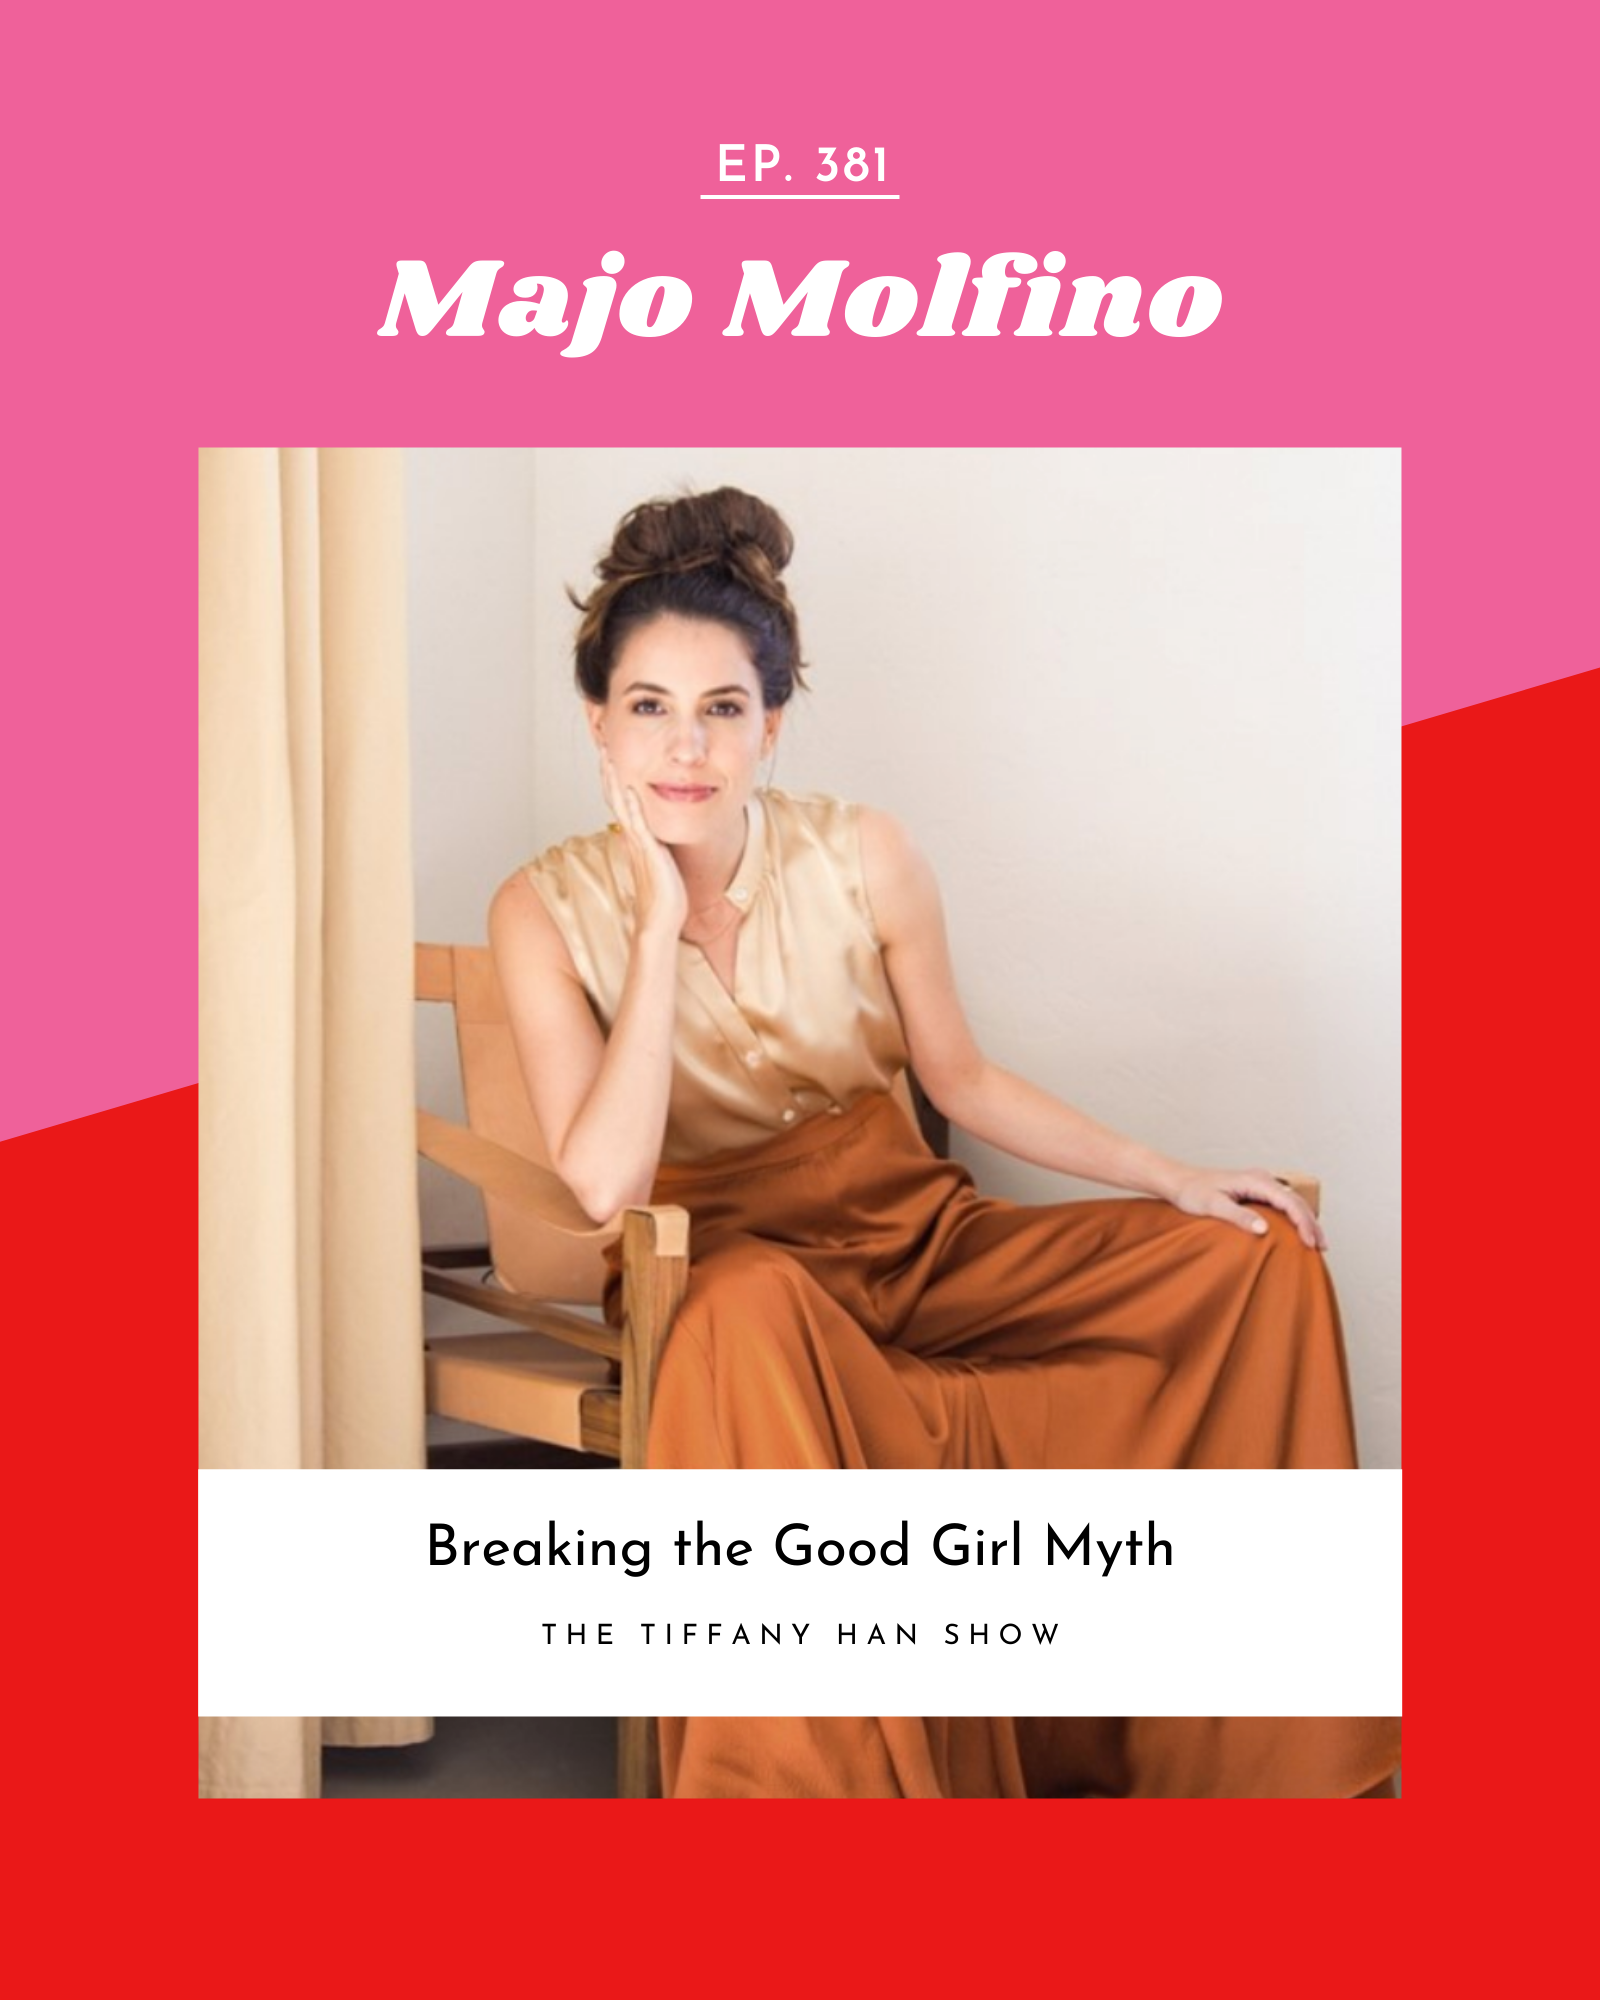 Breaking the Good Girl Myth with Majo Molfino